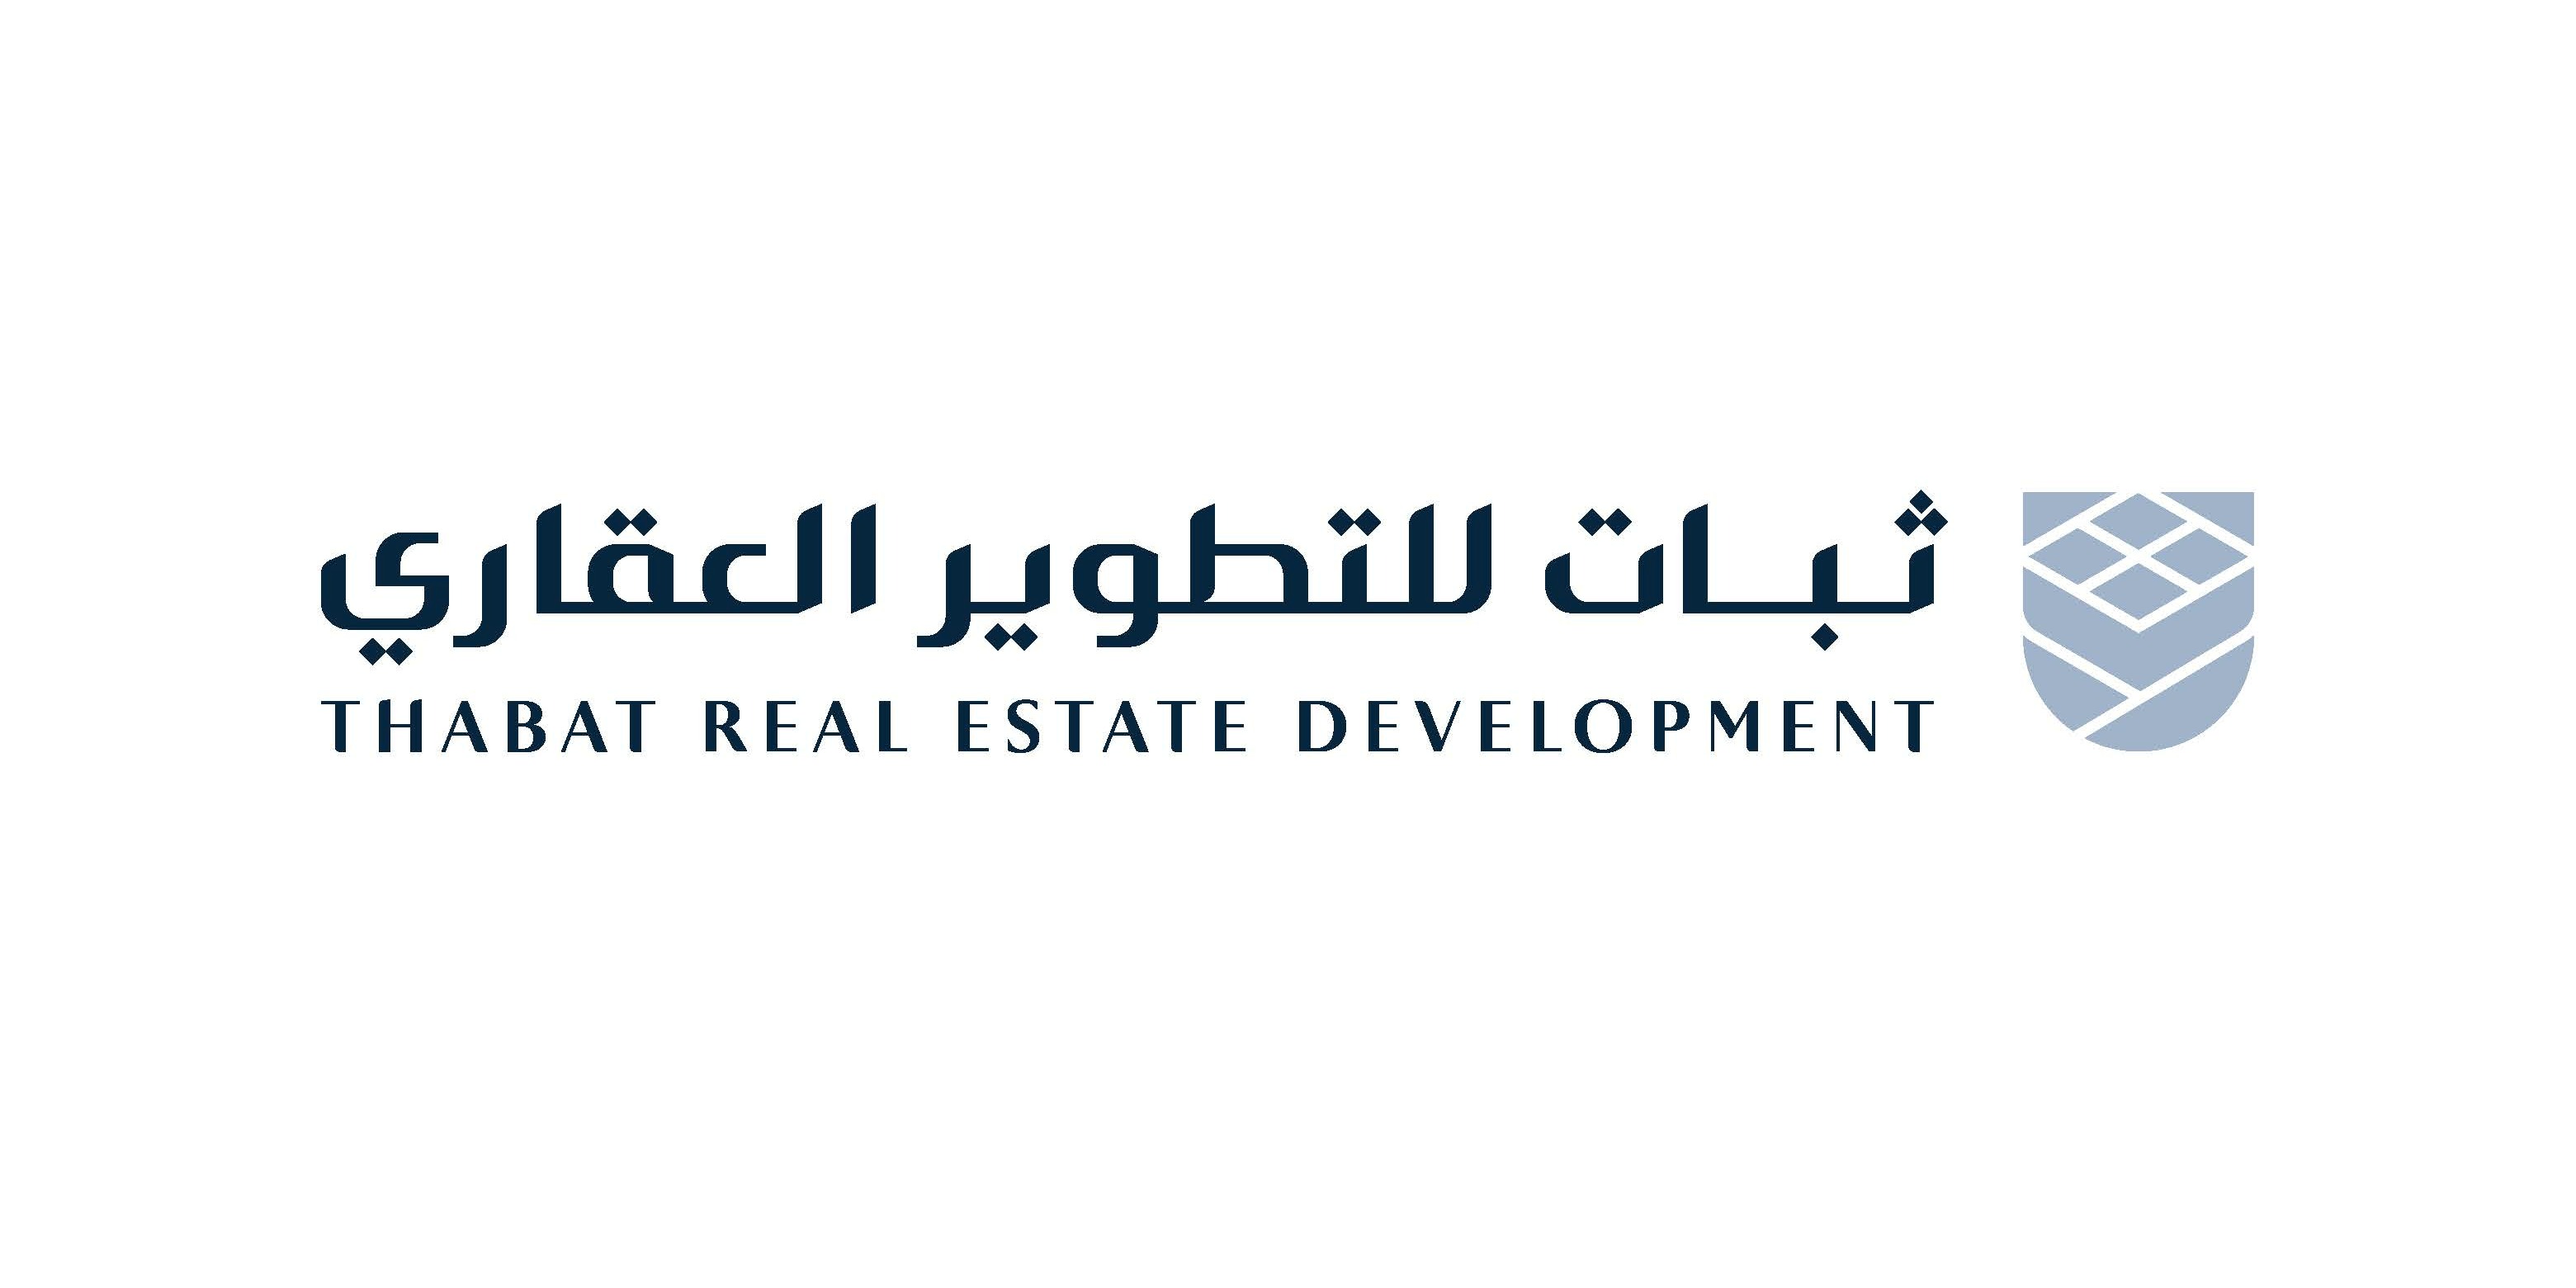 thabat-real-estate-development-company-ltd-rxhoawjpdg9yxze3mjizmti